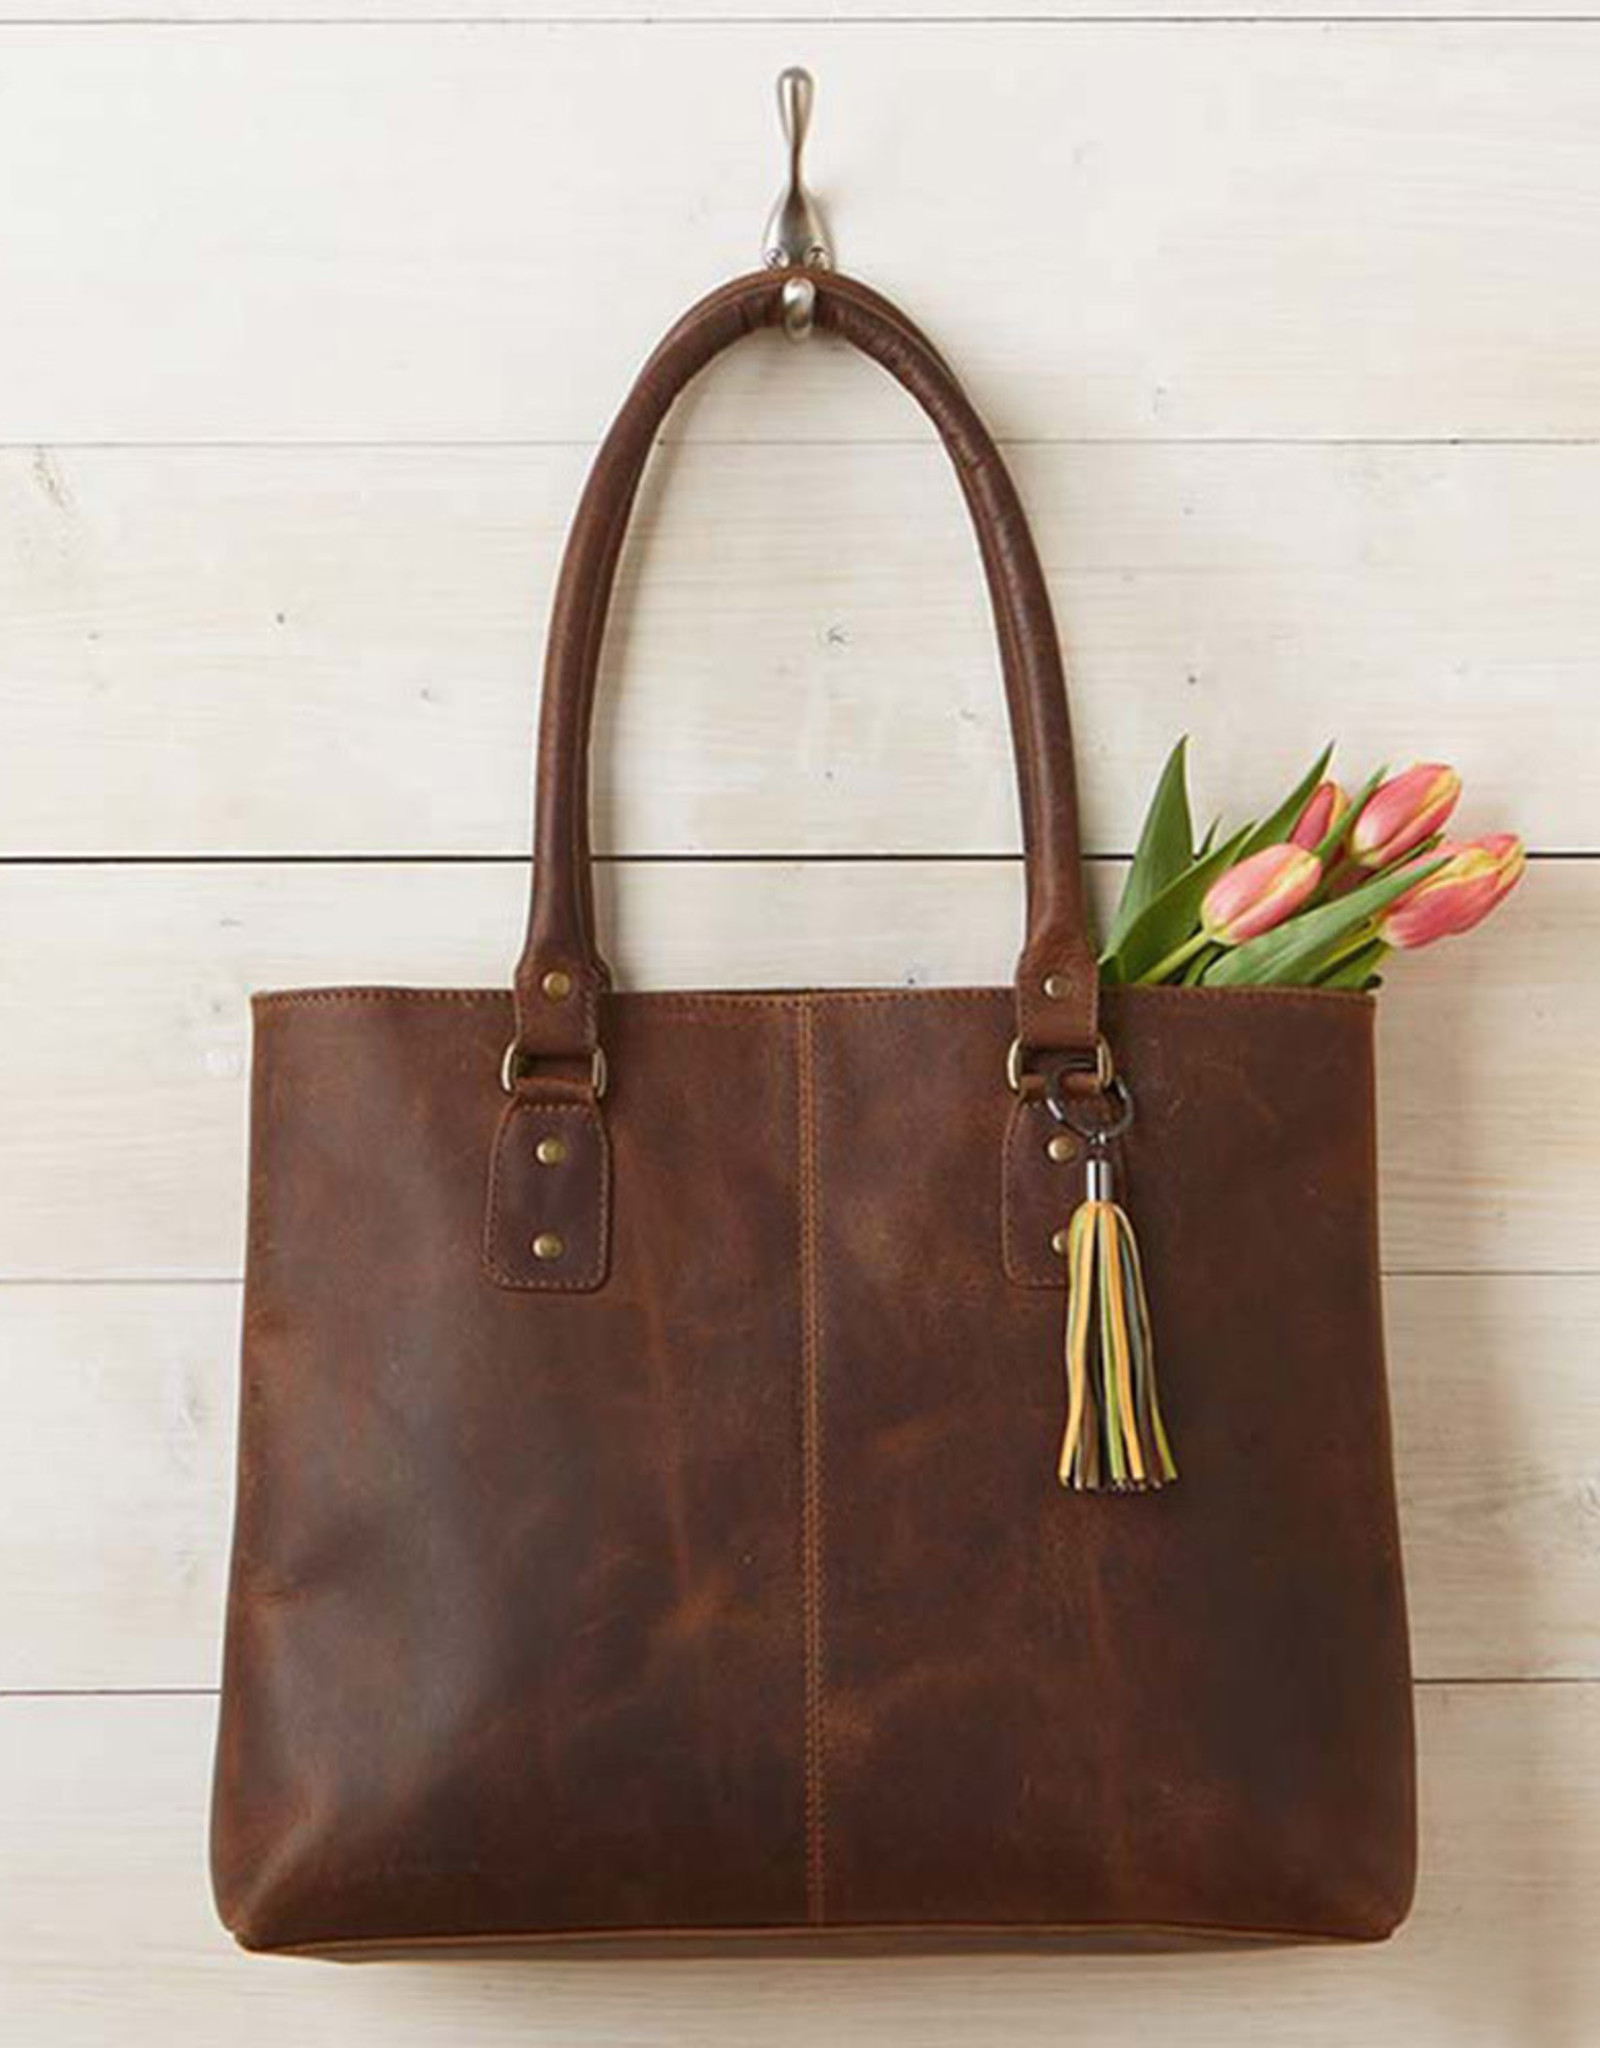 Serrv Rustic Leather Handbag